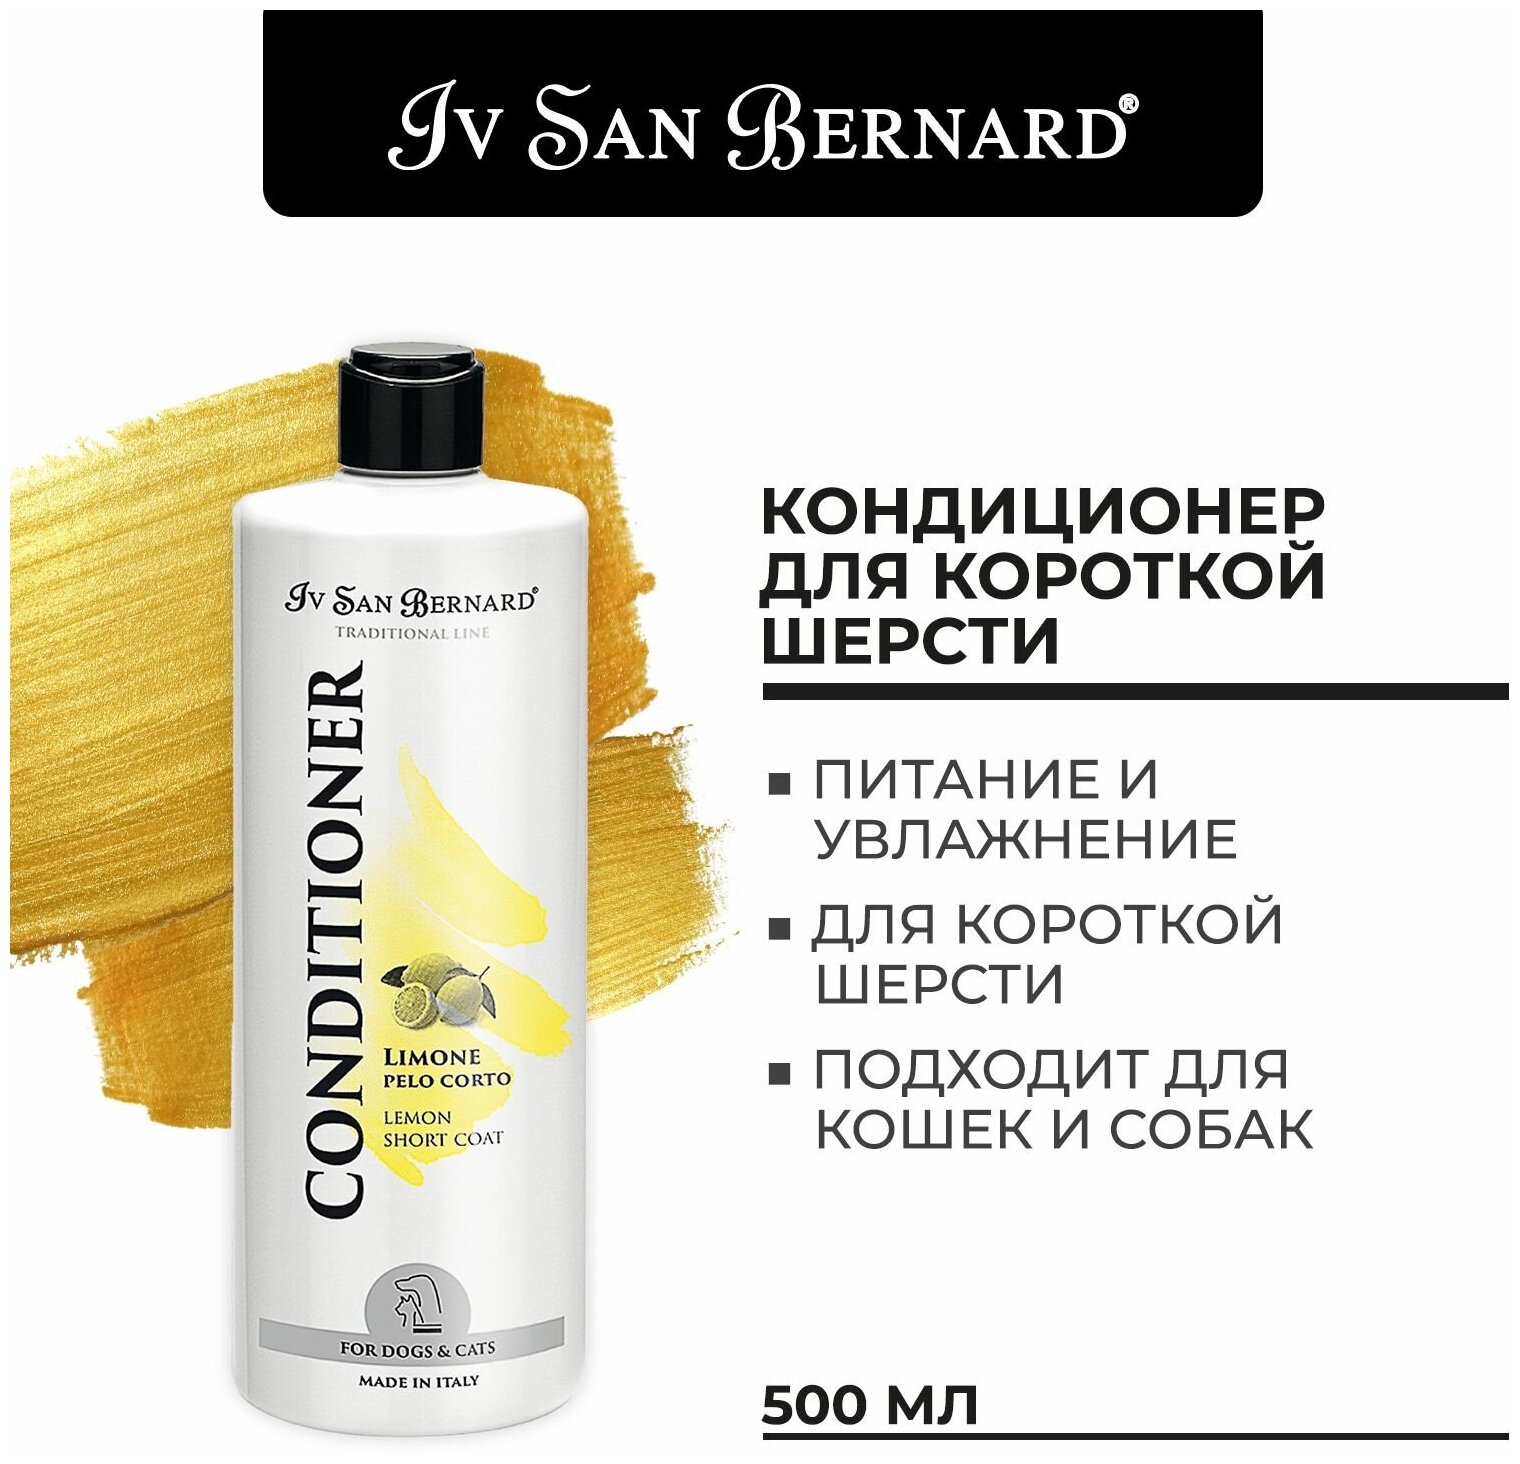 Iv San Bernard traditional line lemon кондиционер для короткой шерсти